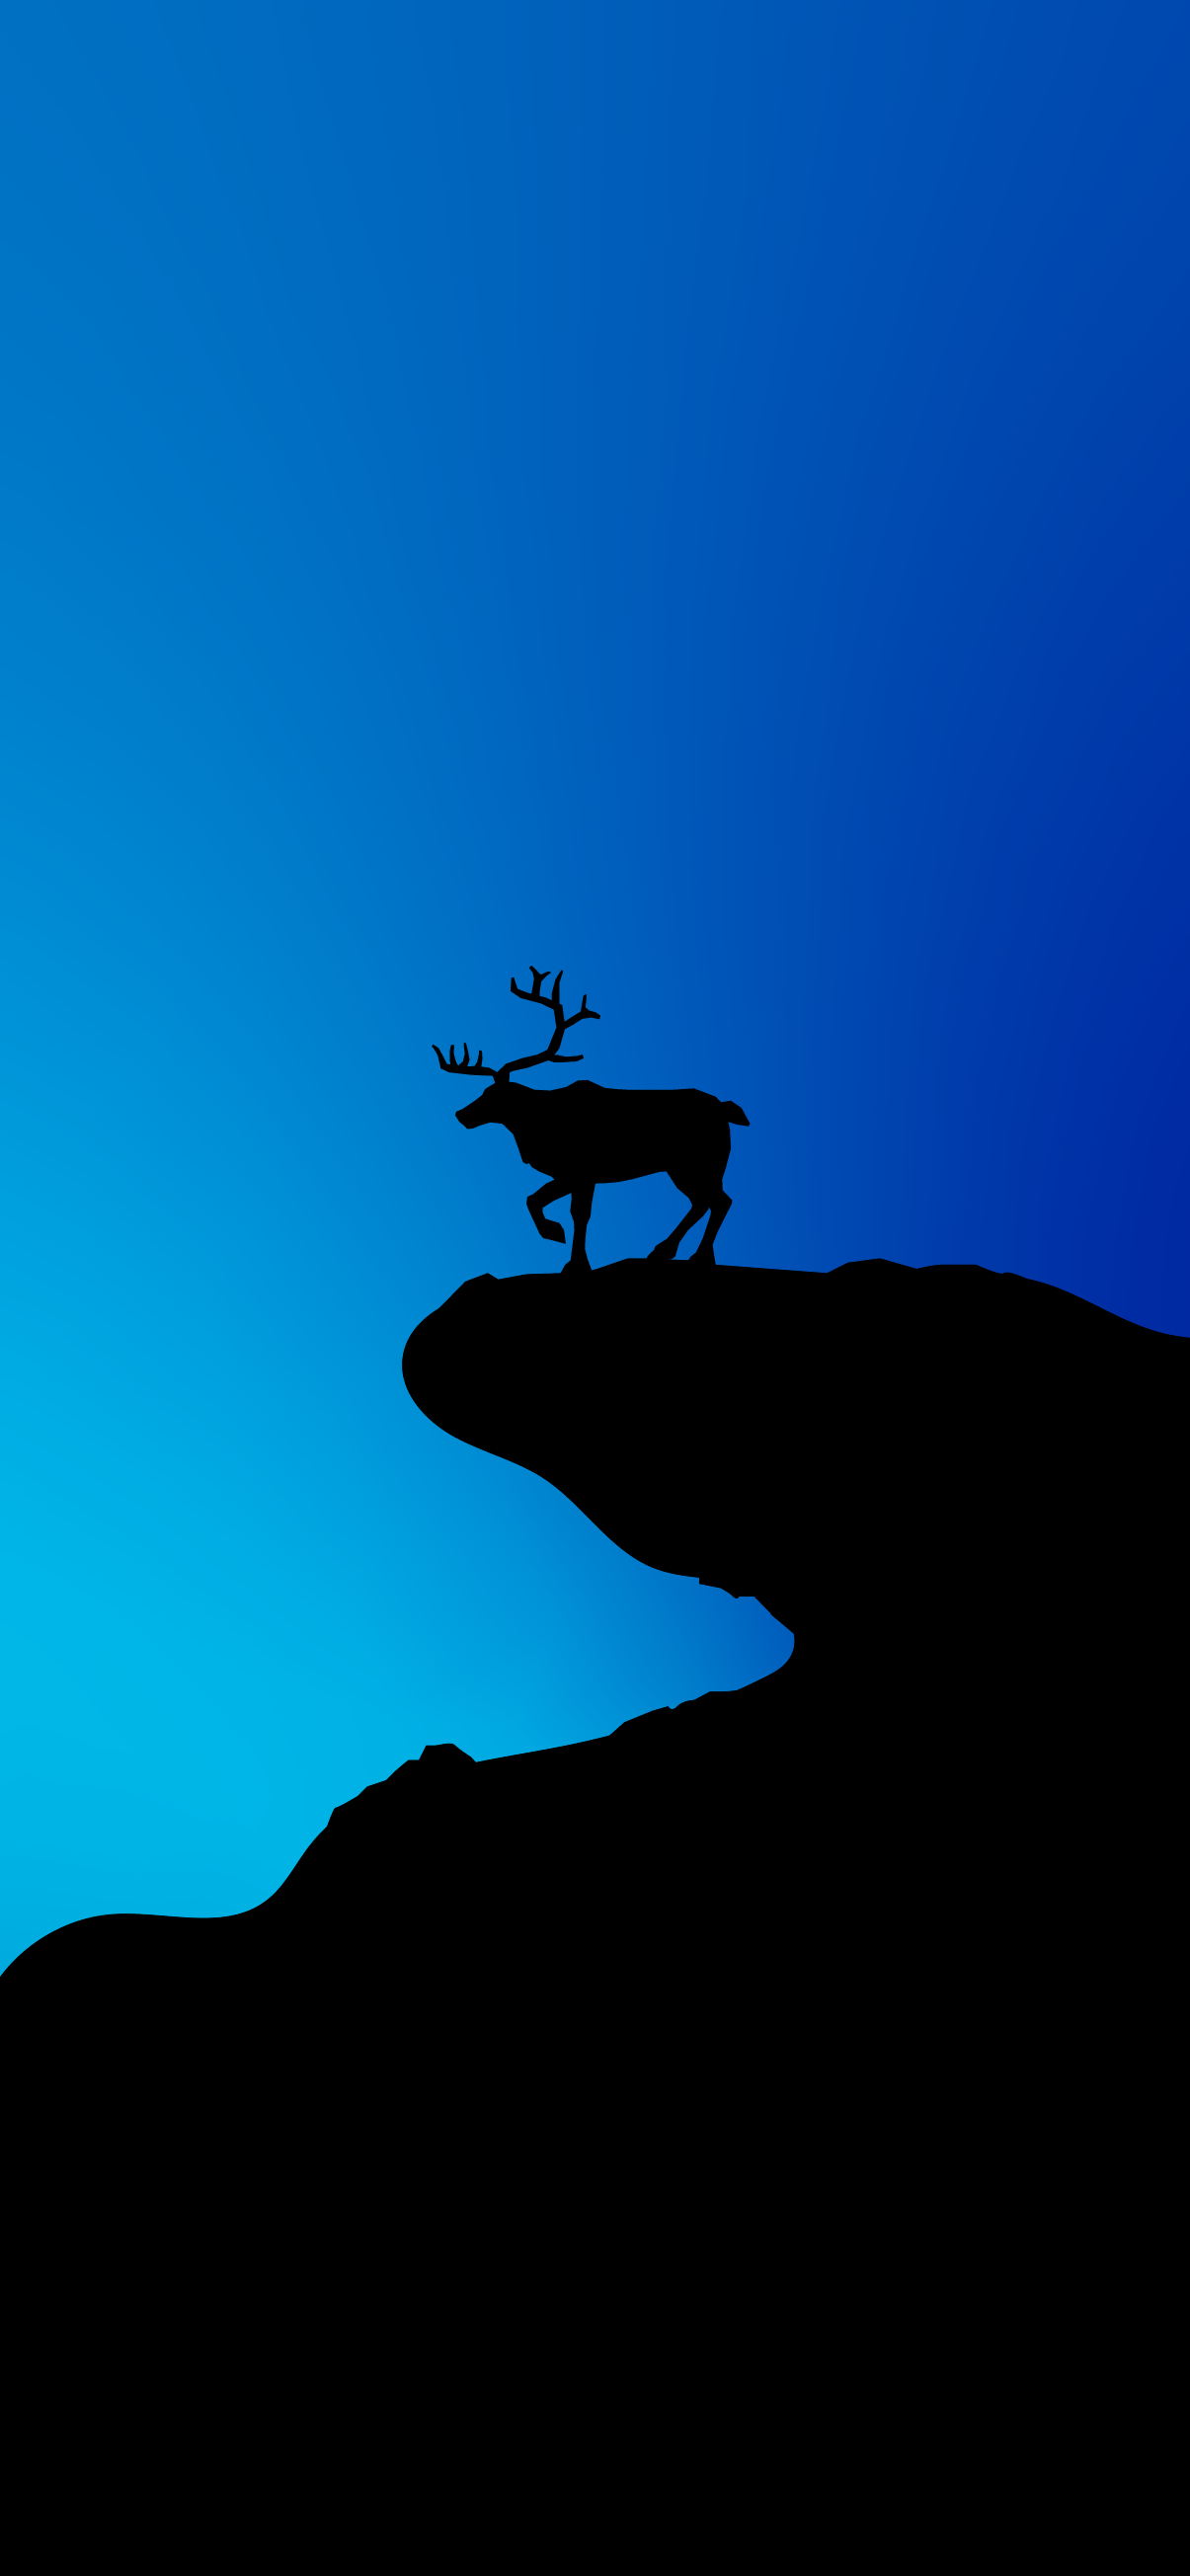 Minimalist deer silhouette iphone wallpaper hd